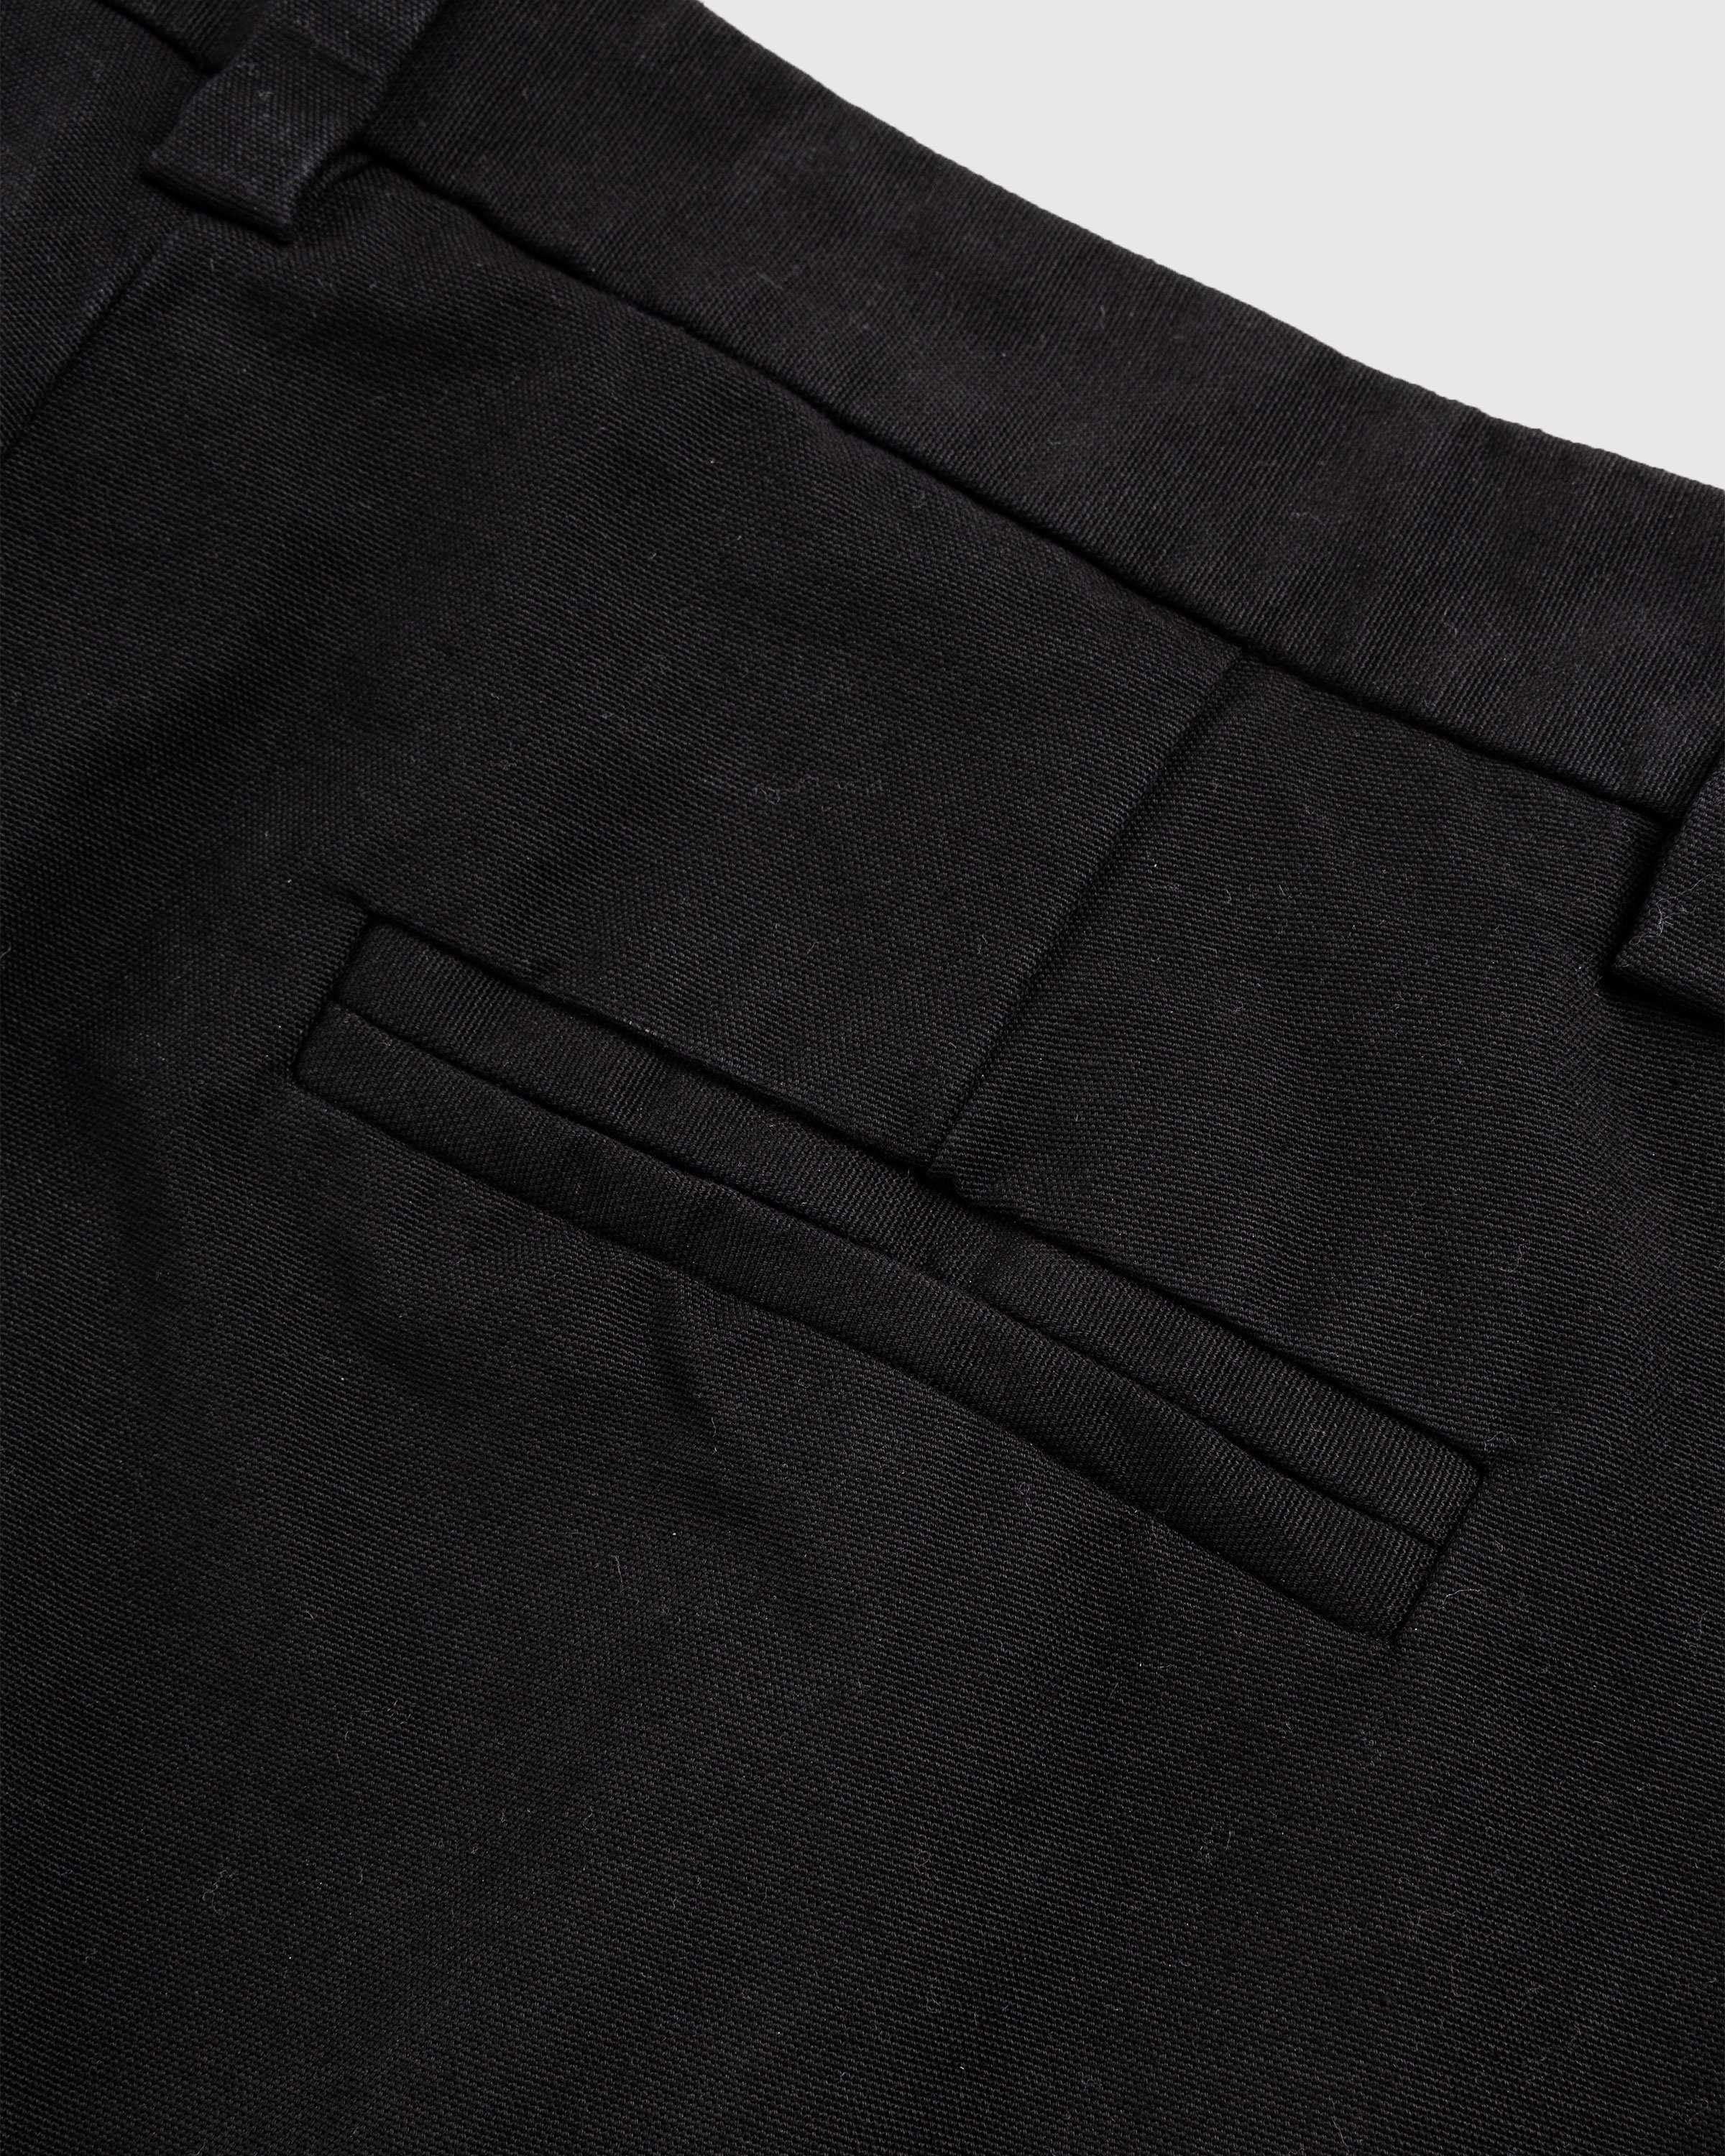 Winnie New York - Bottom Closure Trouser Black - Clothing - Black - Image 5